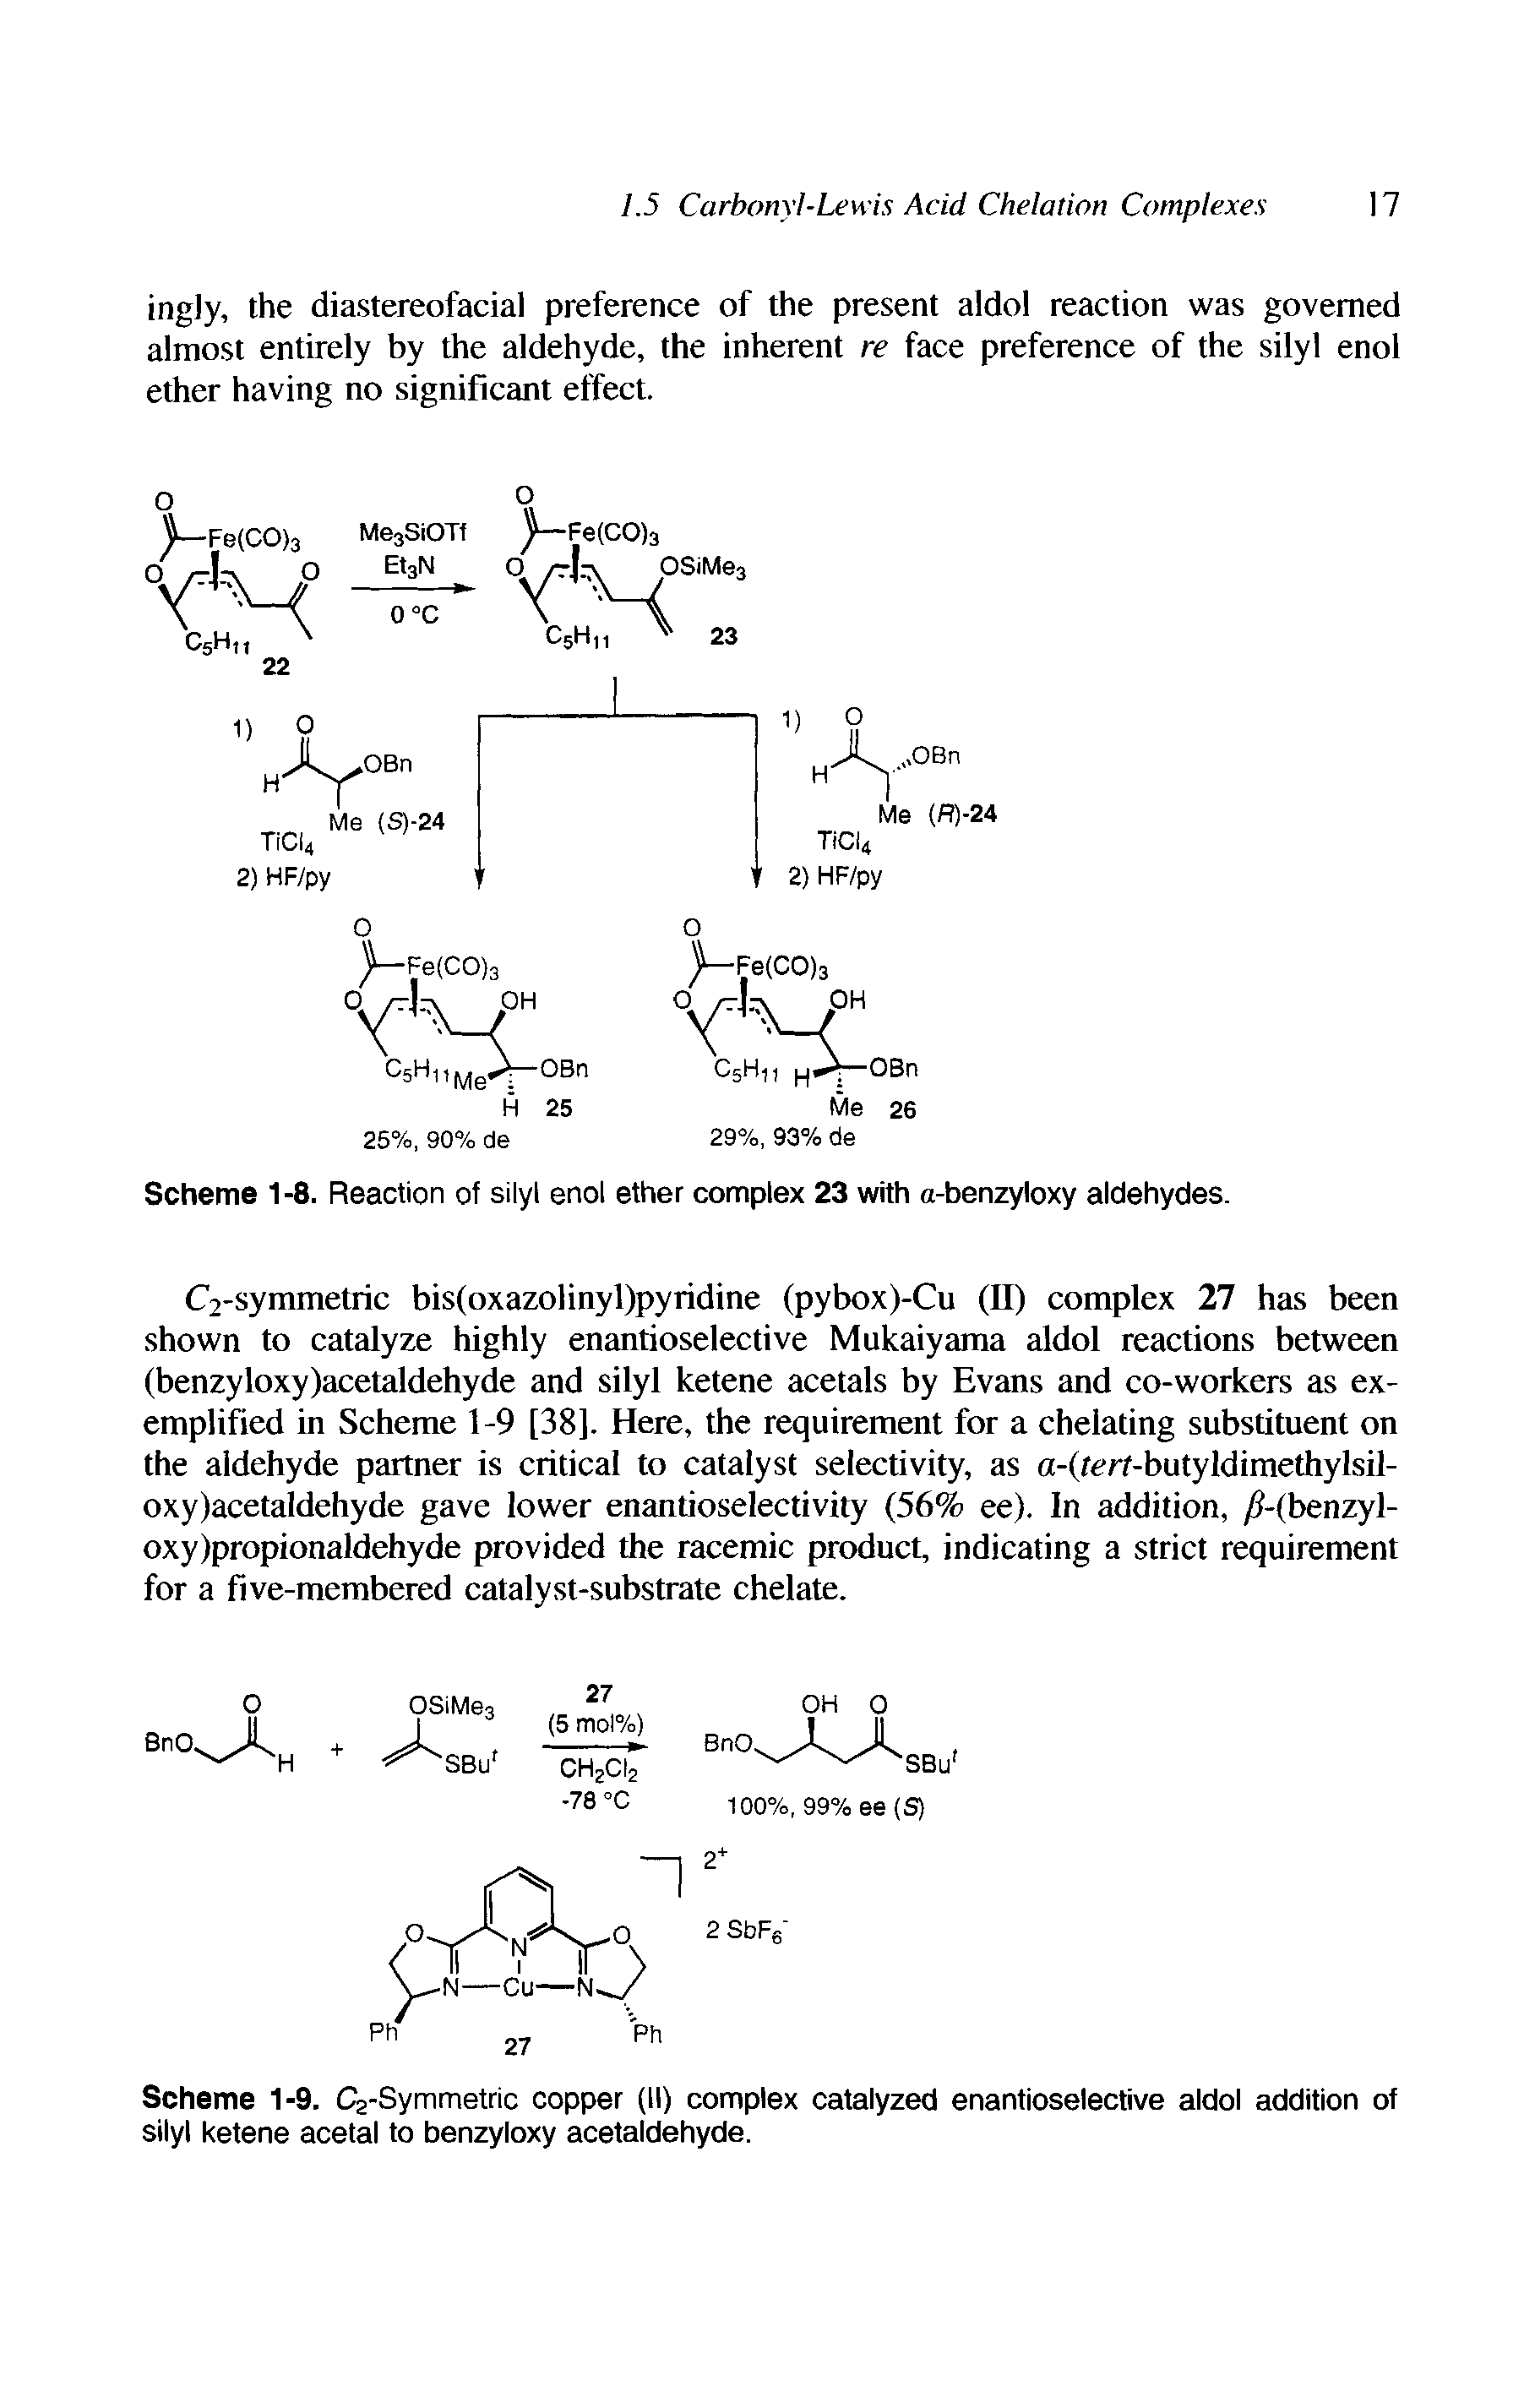 Scheme 1-9. Ca-Symmetric copper (II) complex catalyzed enantioselective aldol addition of silyl ketene acetal to benzyloxy acetaldehyde.